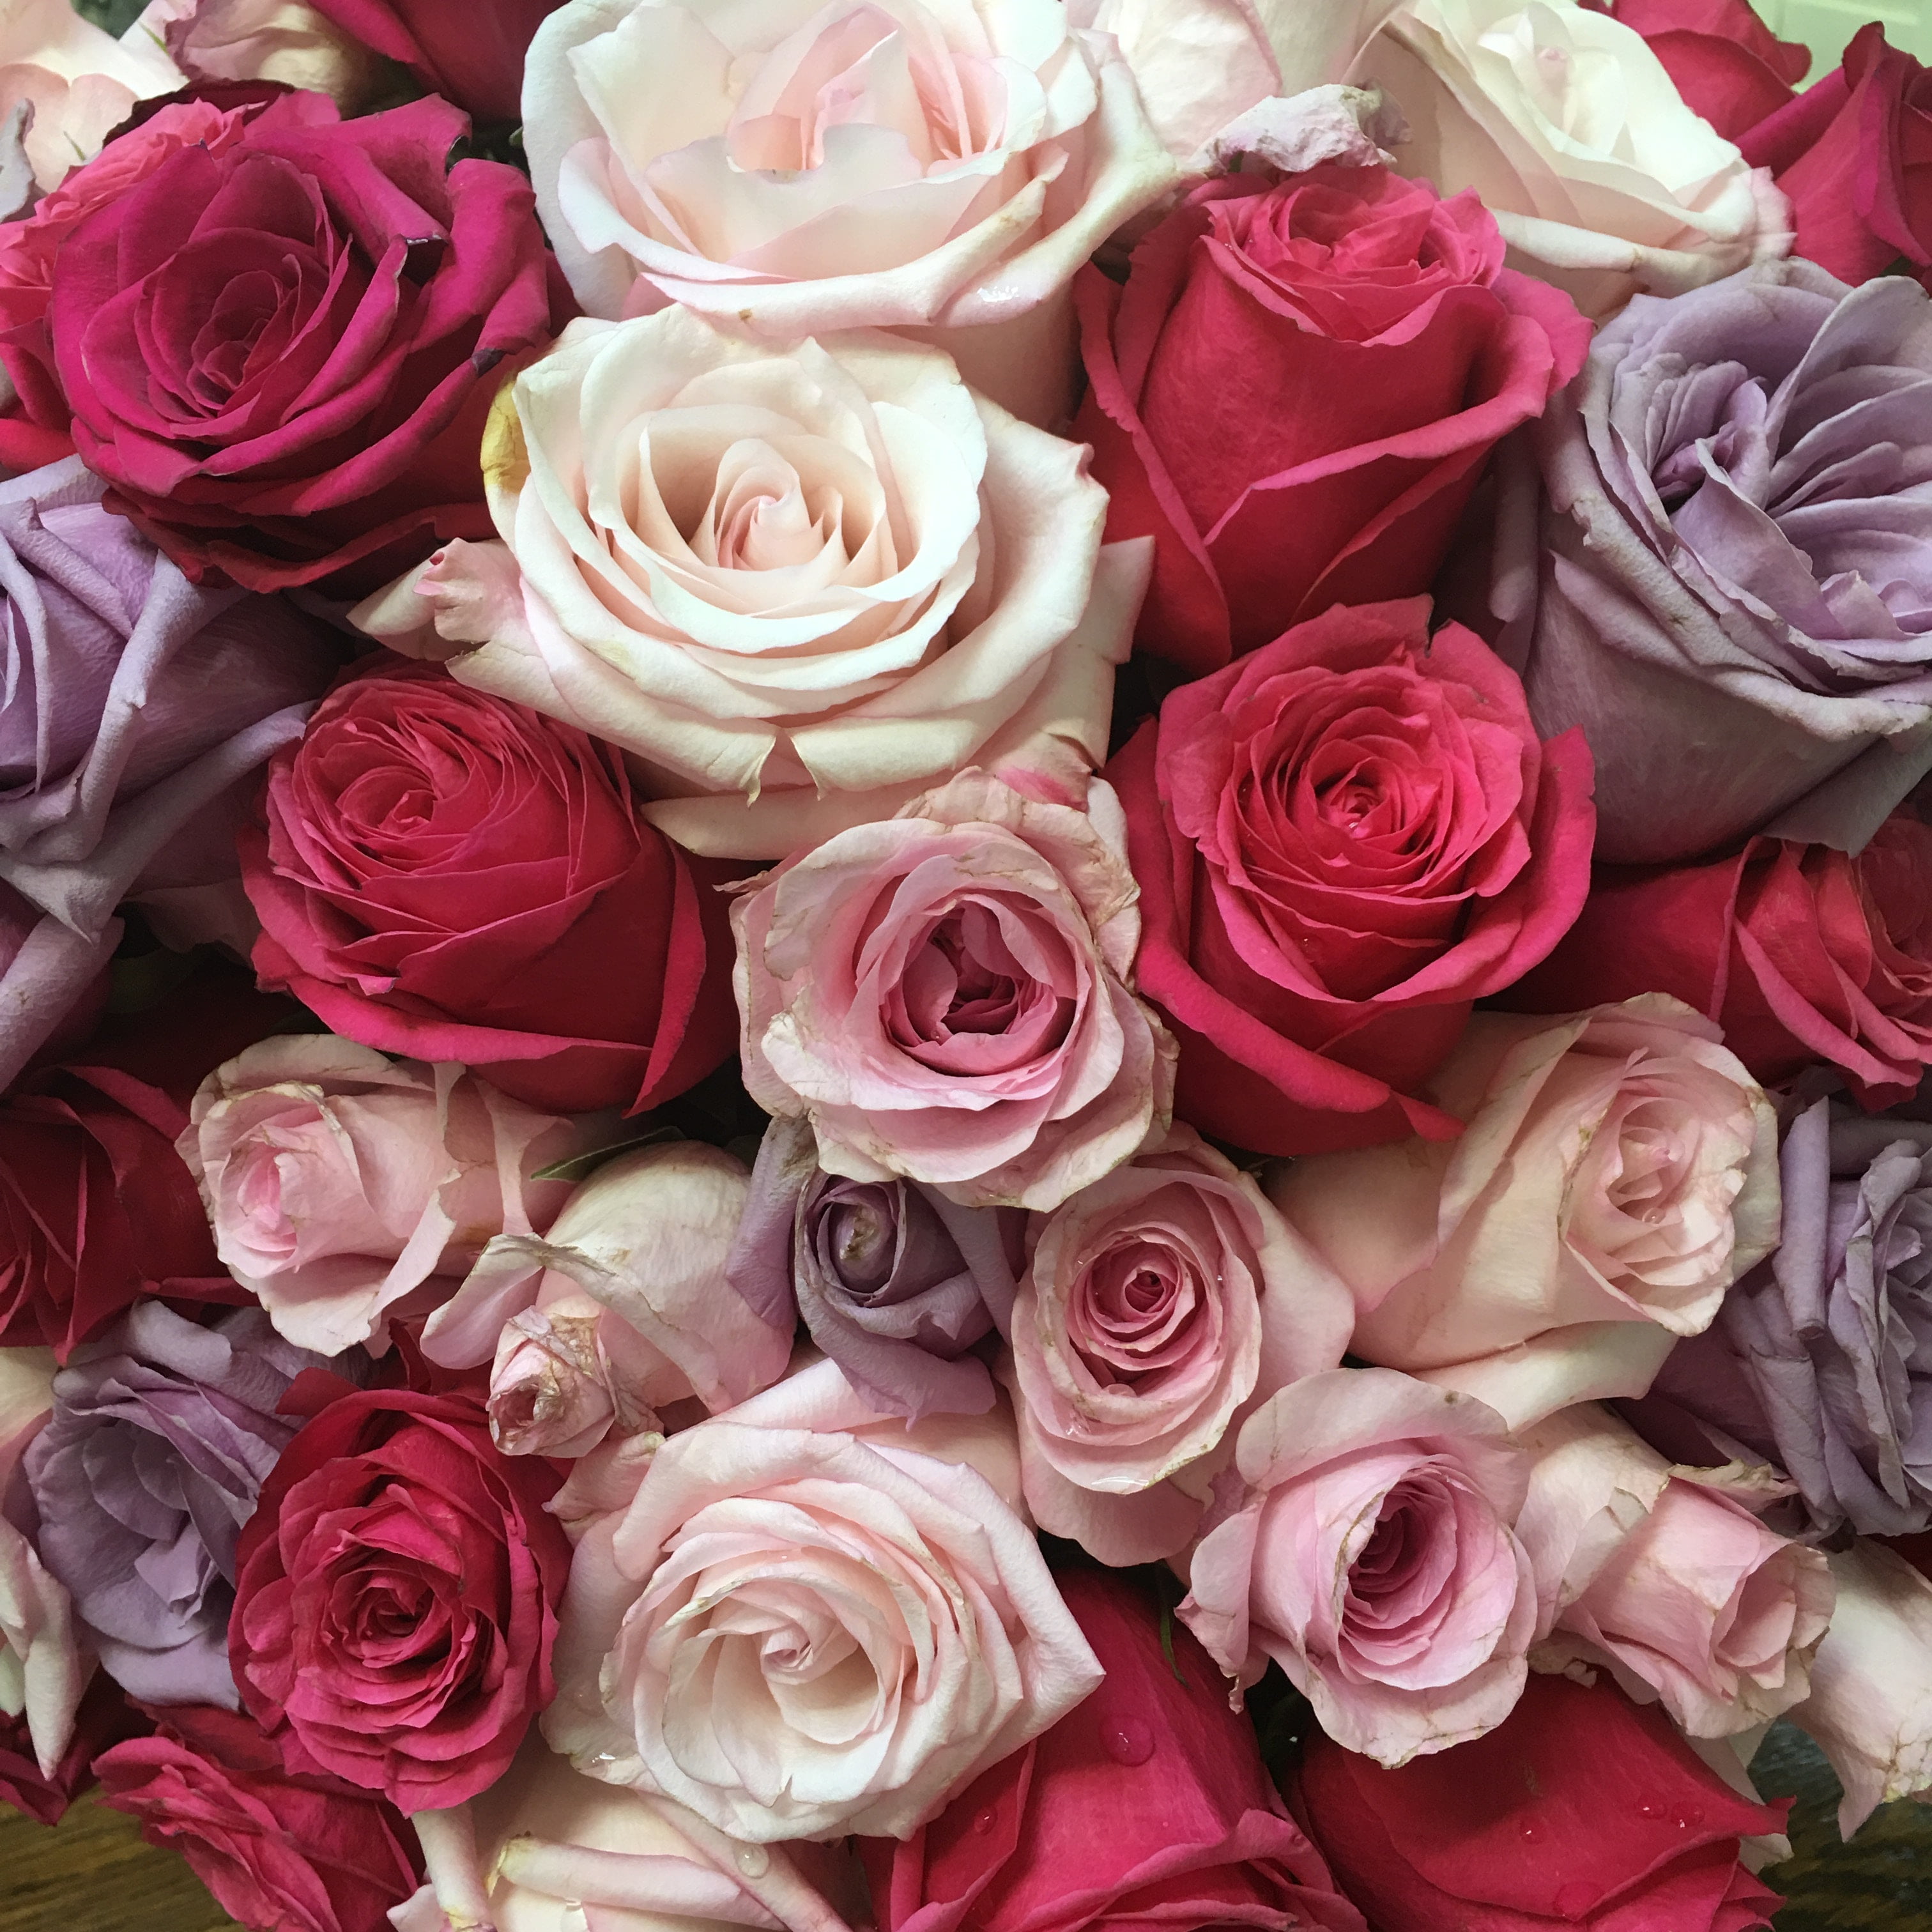 rose wallpaper hd,flower,rose,garden roses,pink,cut flowers